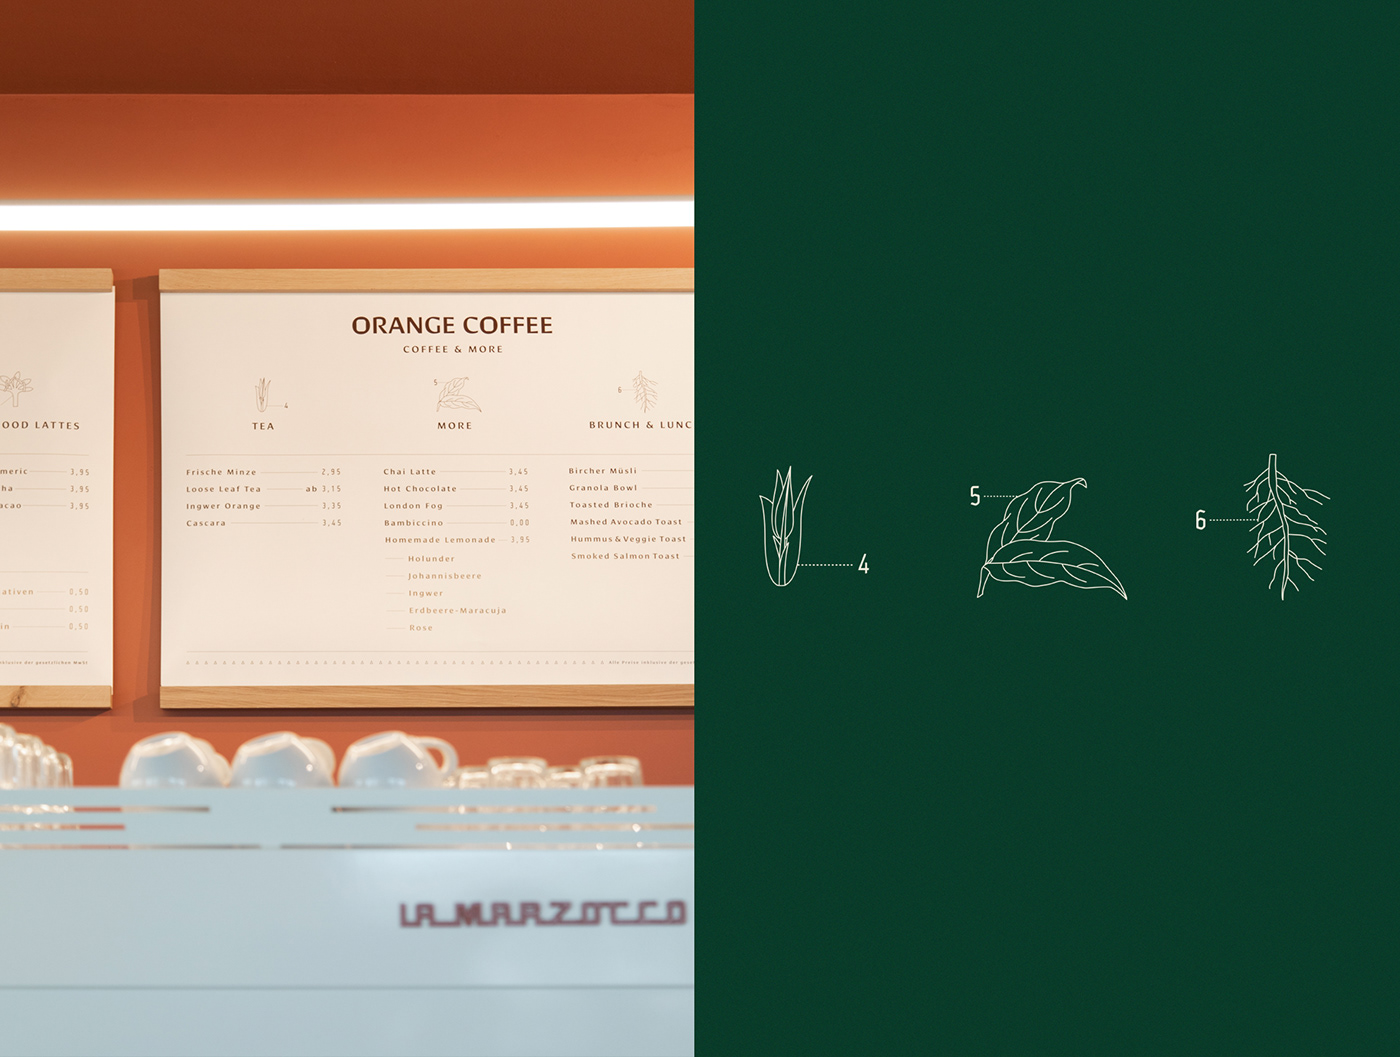 Coffee designstudiobob Düsseldorf Terrazzo orange coffeebranding restaurant cafe setdesign ILLUSTRATION 